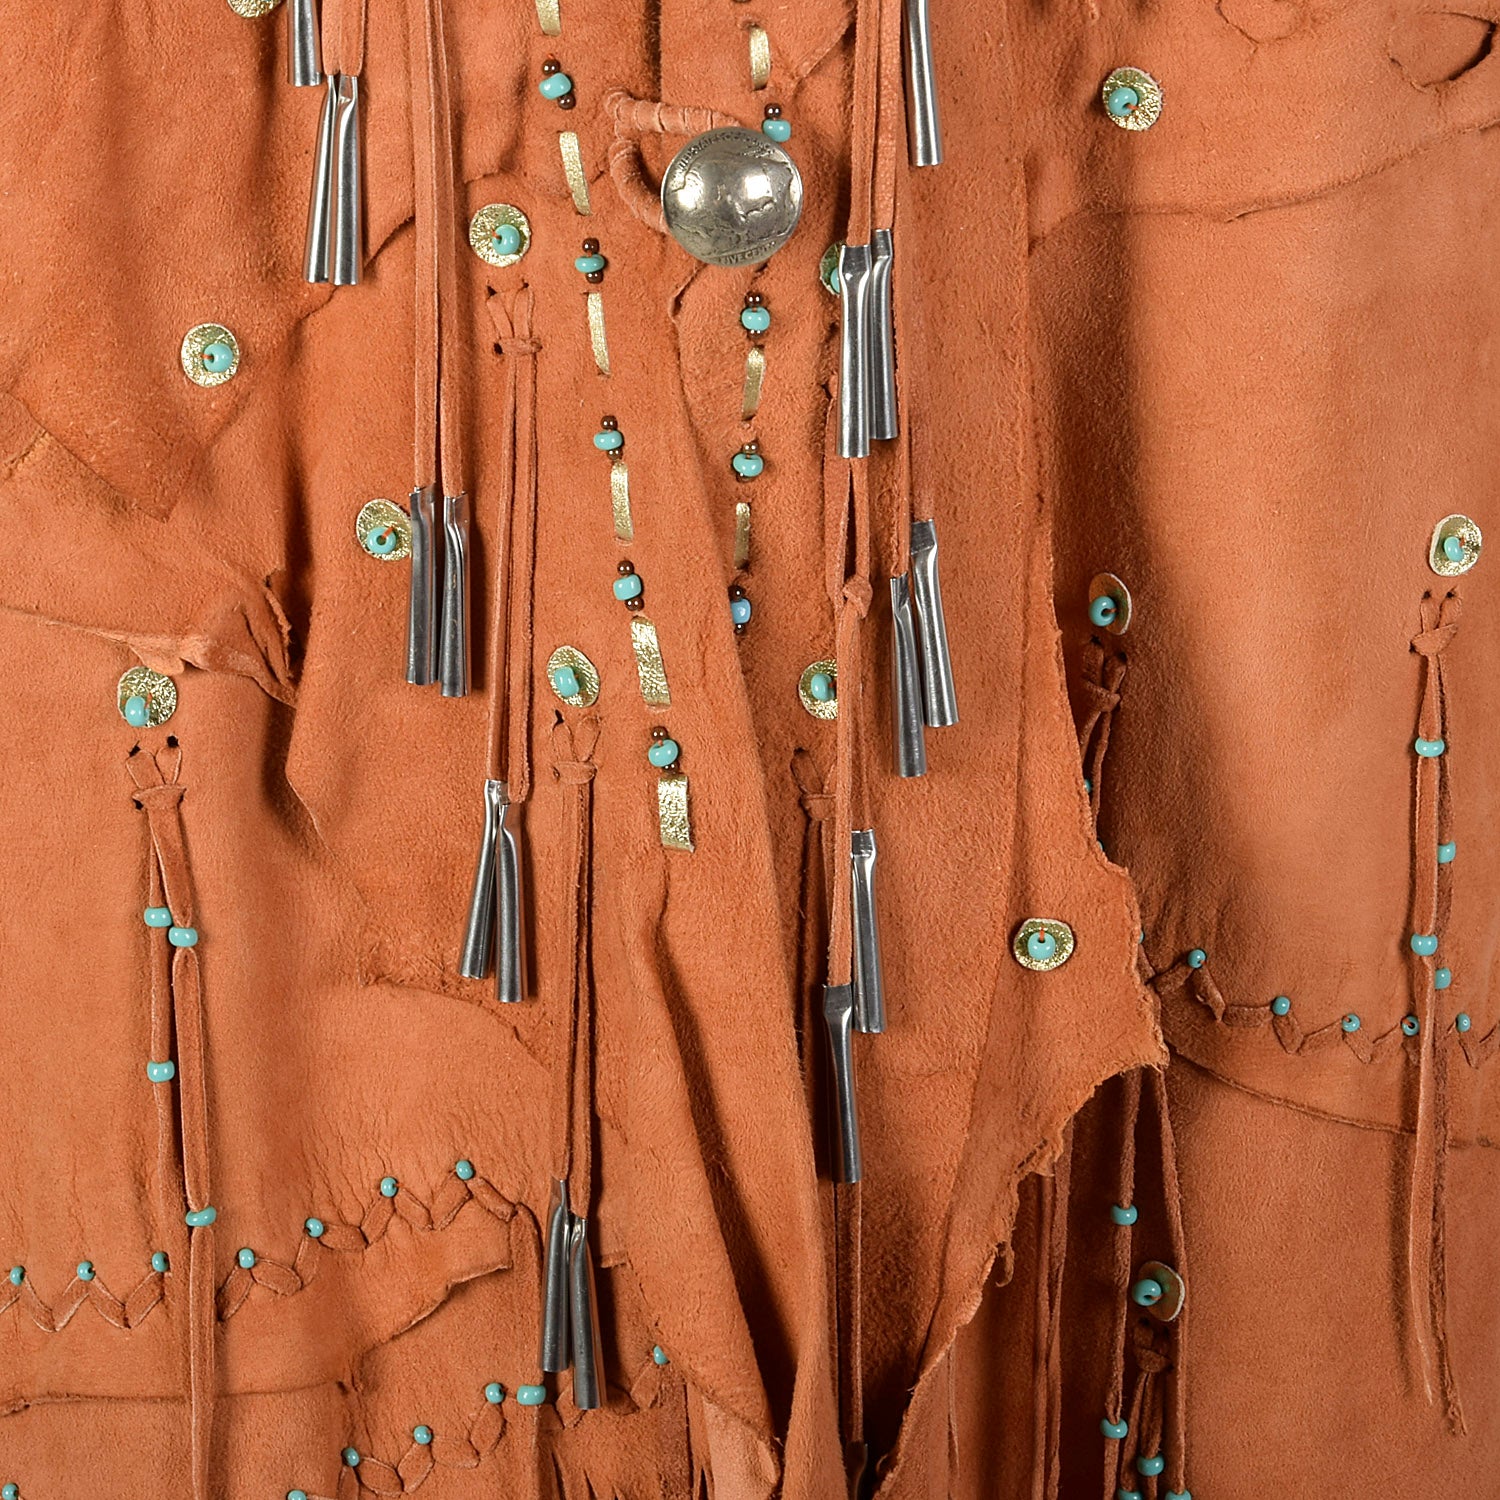 Native American Inspired Suede Leather Dress Bohemian Beaded Fringe Festival Jacket